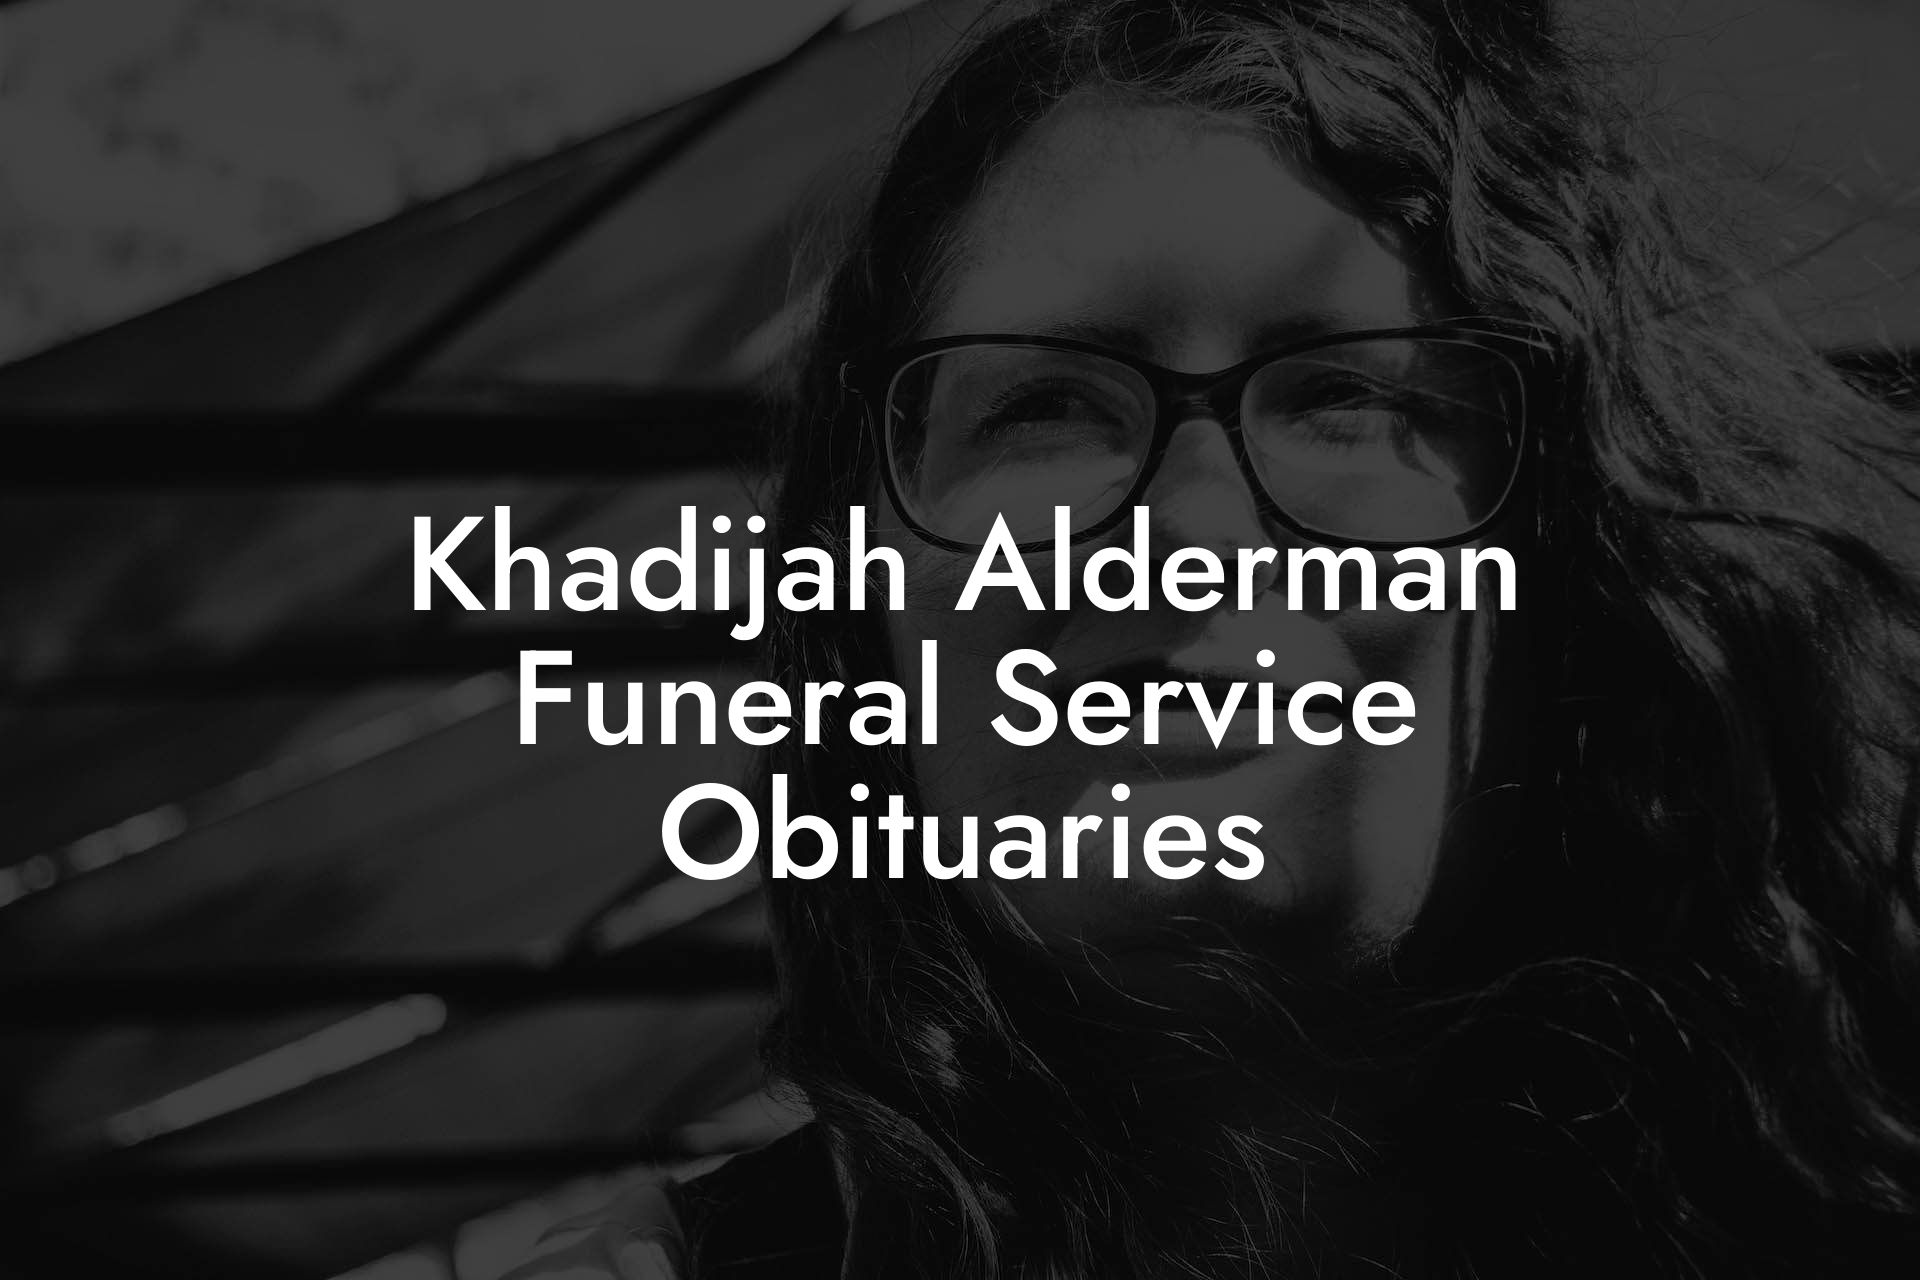 Khadijah Alderman Funeral Service Obituaries